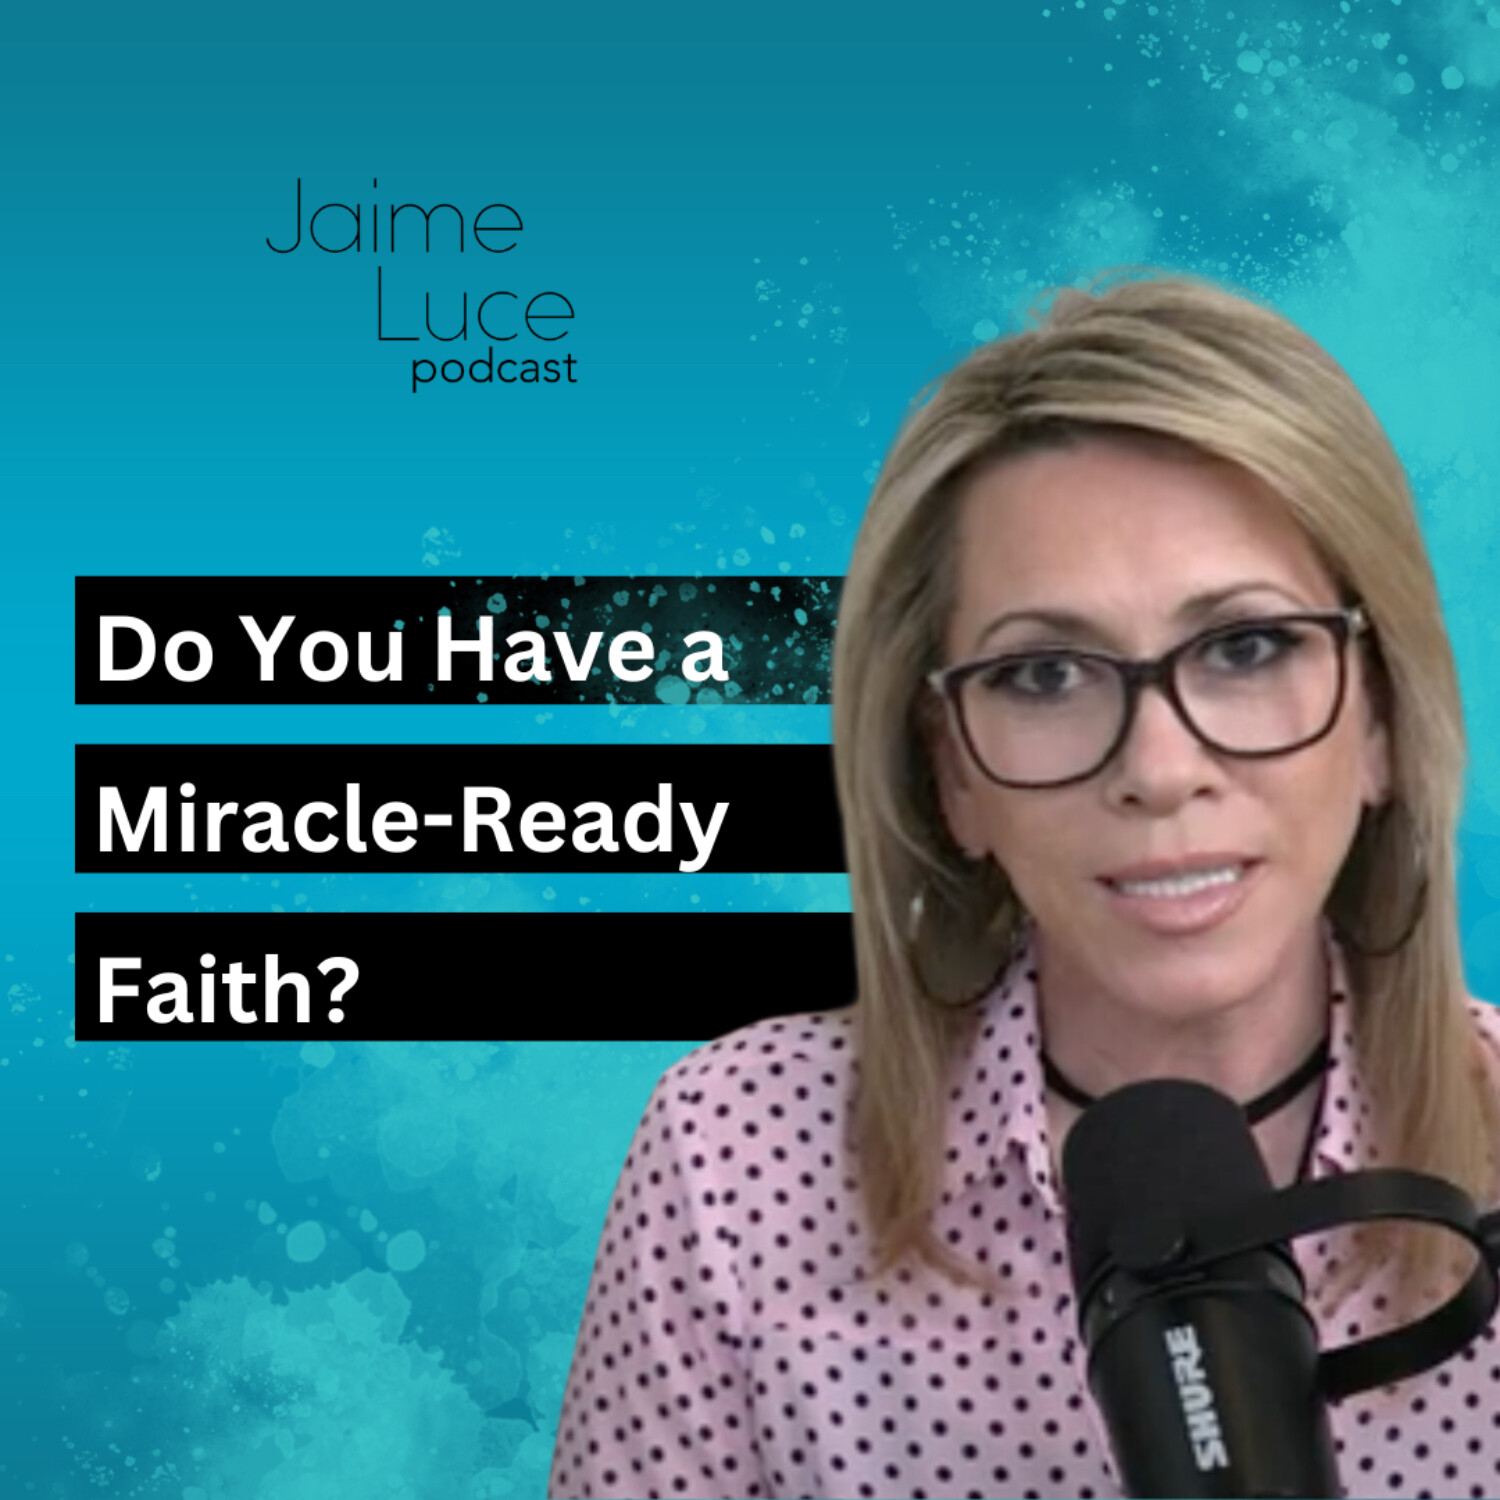 Do You Have a Miracle-Ready Faith?